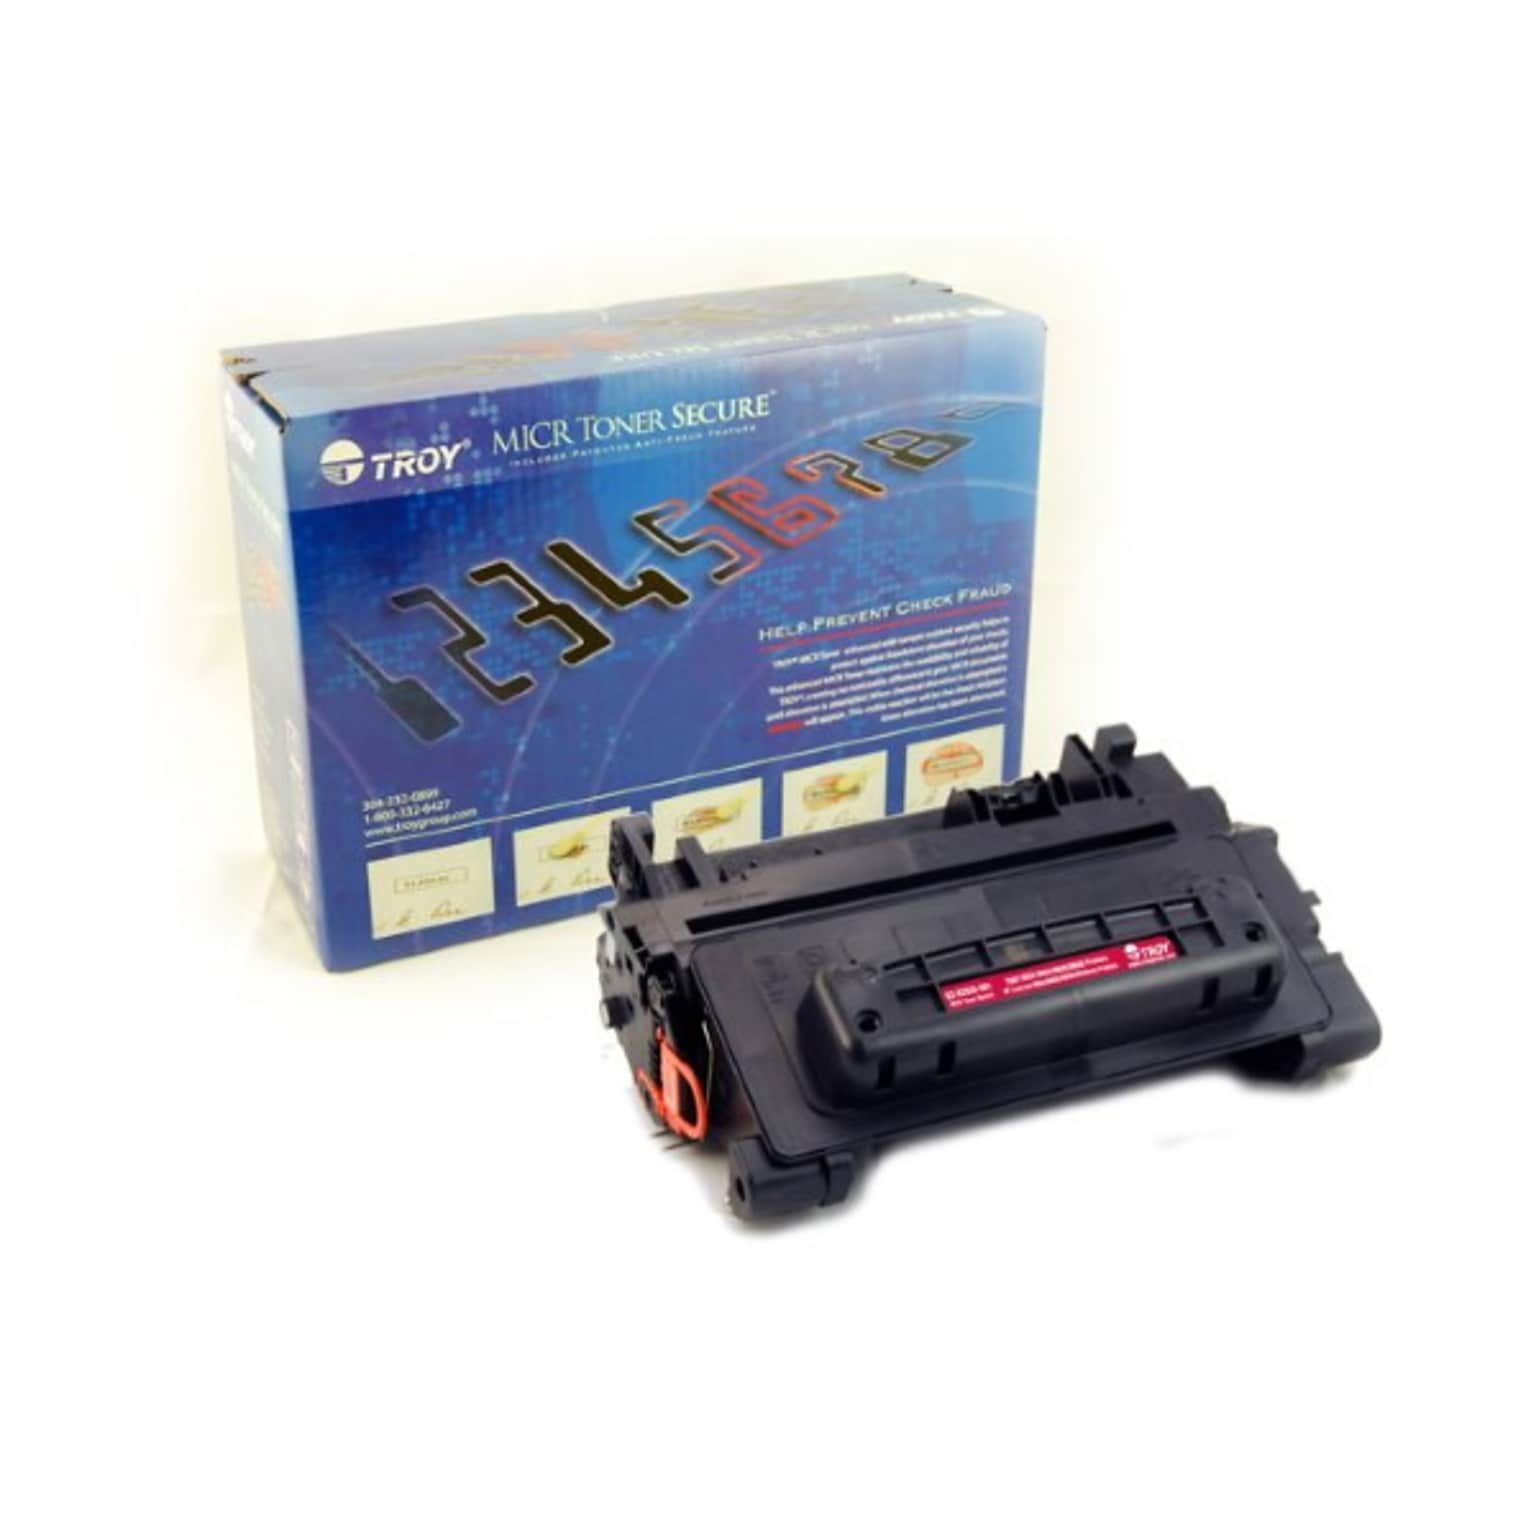 TROY 02-82020-001 MICR Toner Secure Cartridge